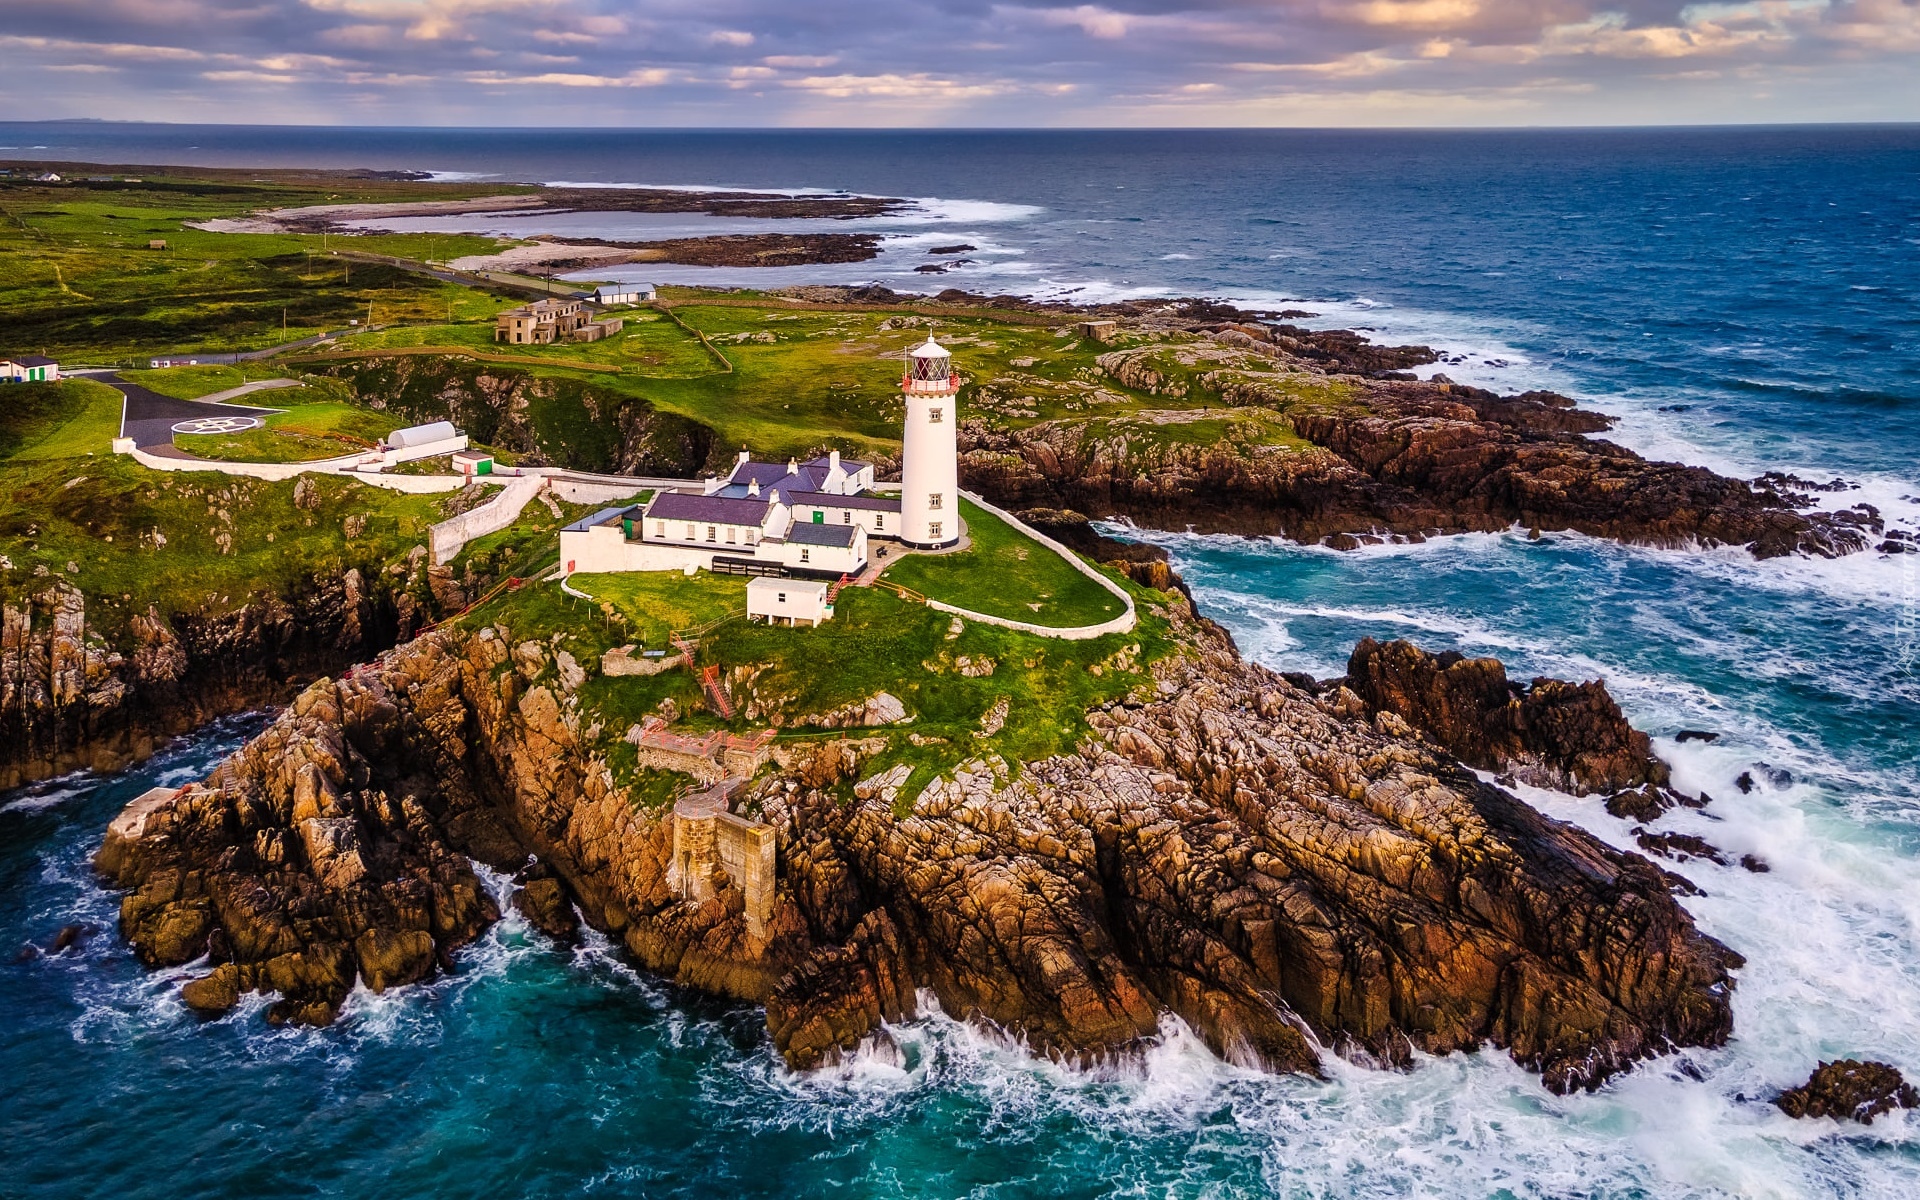 Morze, Latarnia morska, Fanad Head Lighthouse, Skały, Chmury, Portsalon, Irlandia